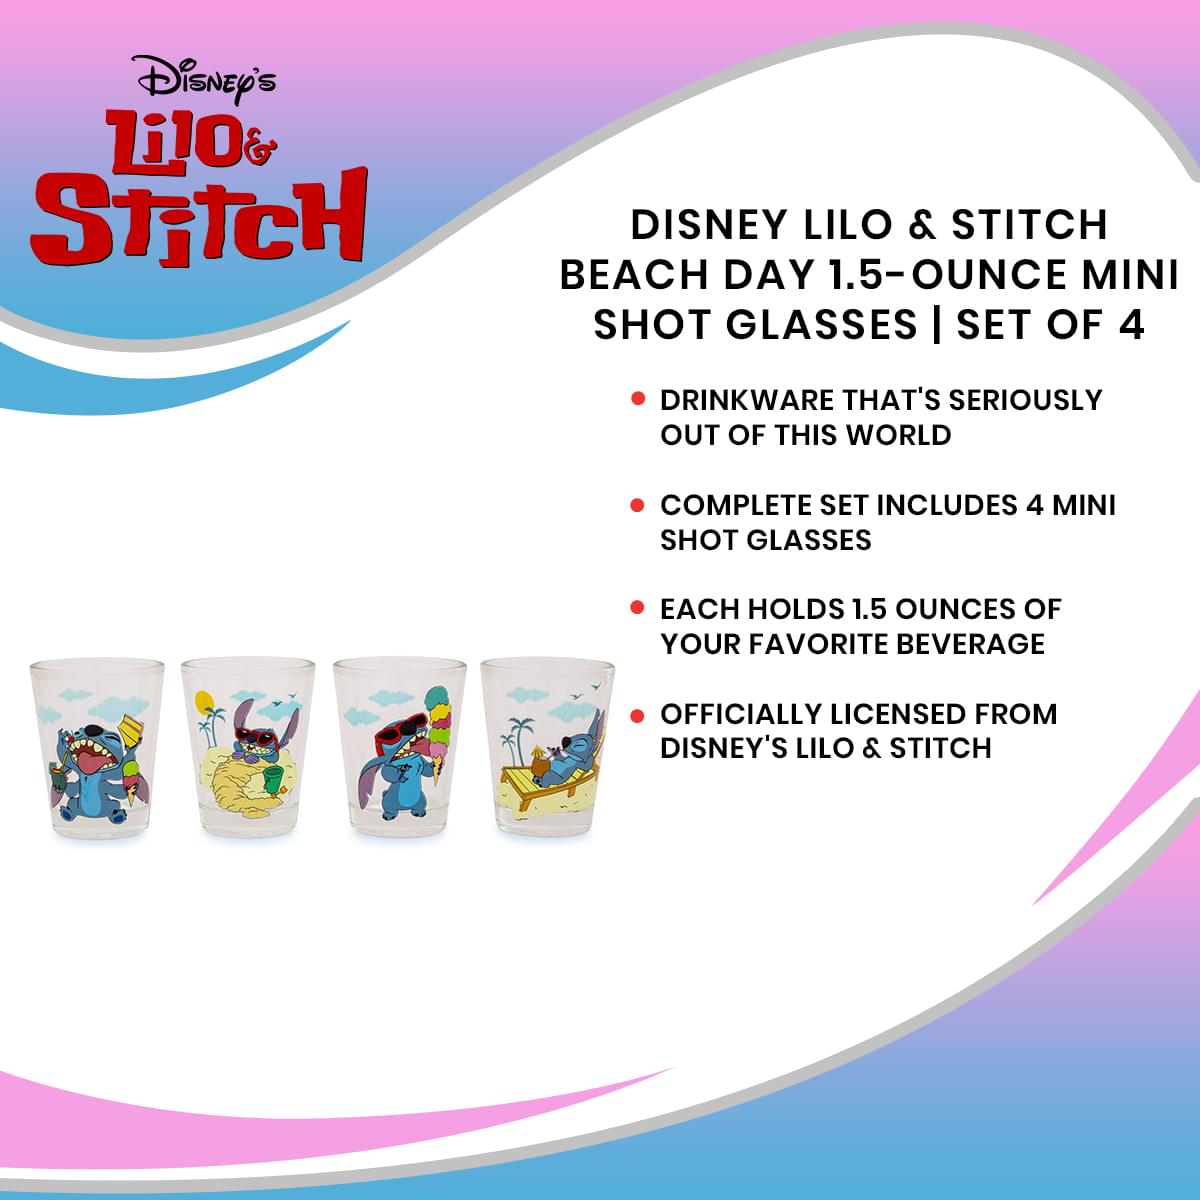 Disney Lilo & Stitch Beach Day 1.5-Ounce Mini Shot Glasses | Set of 4